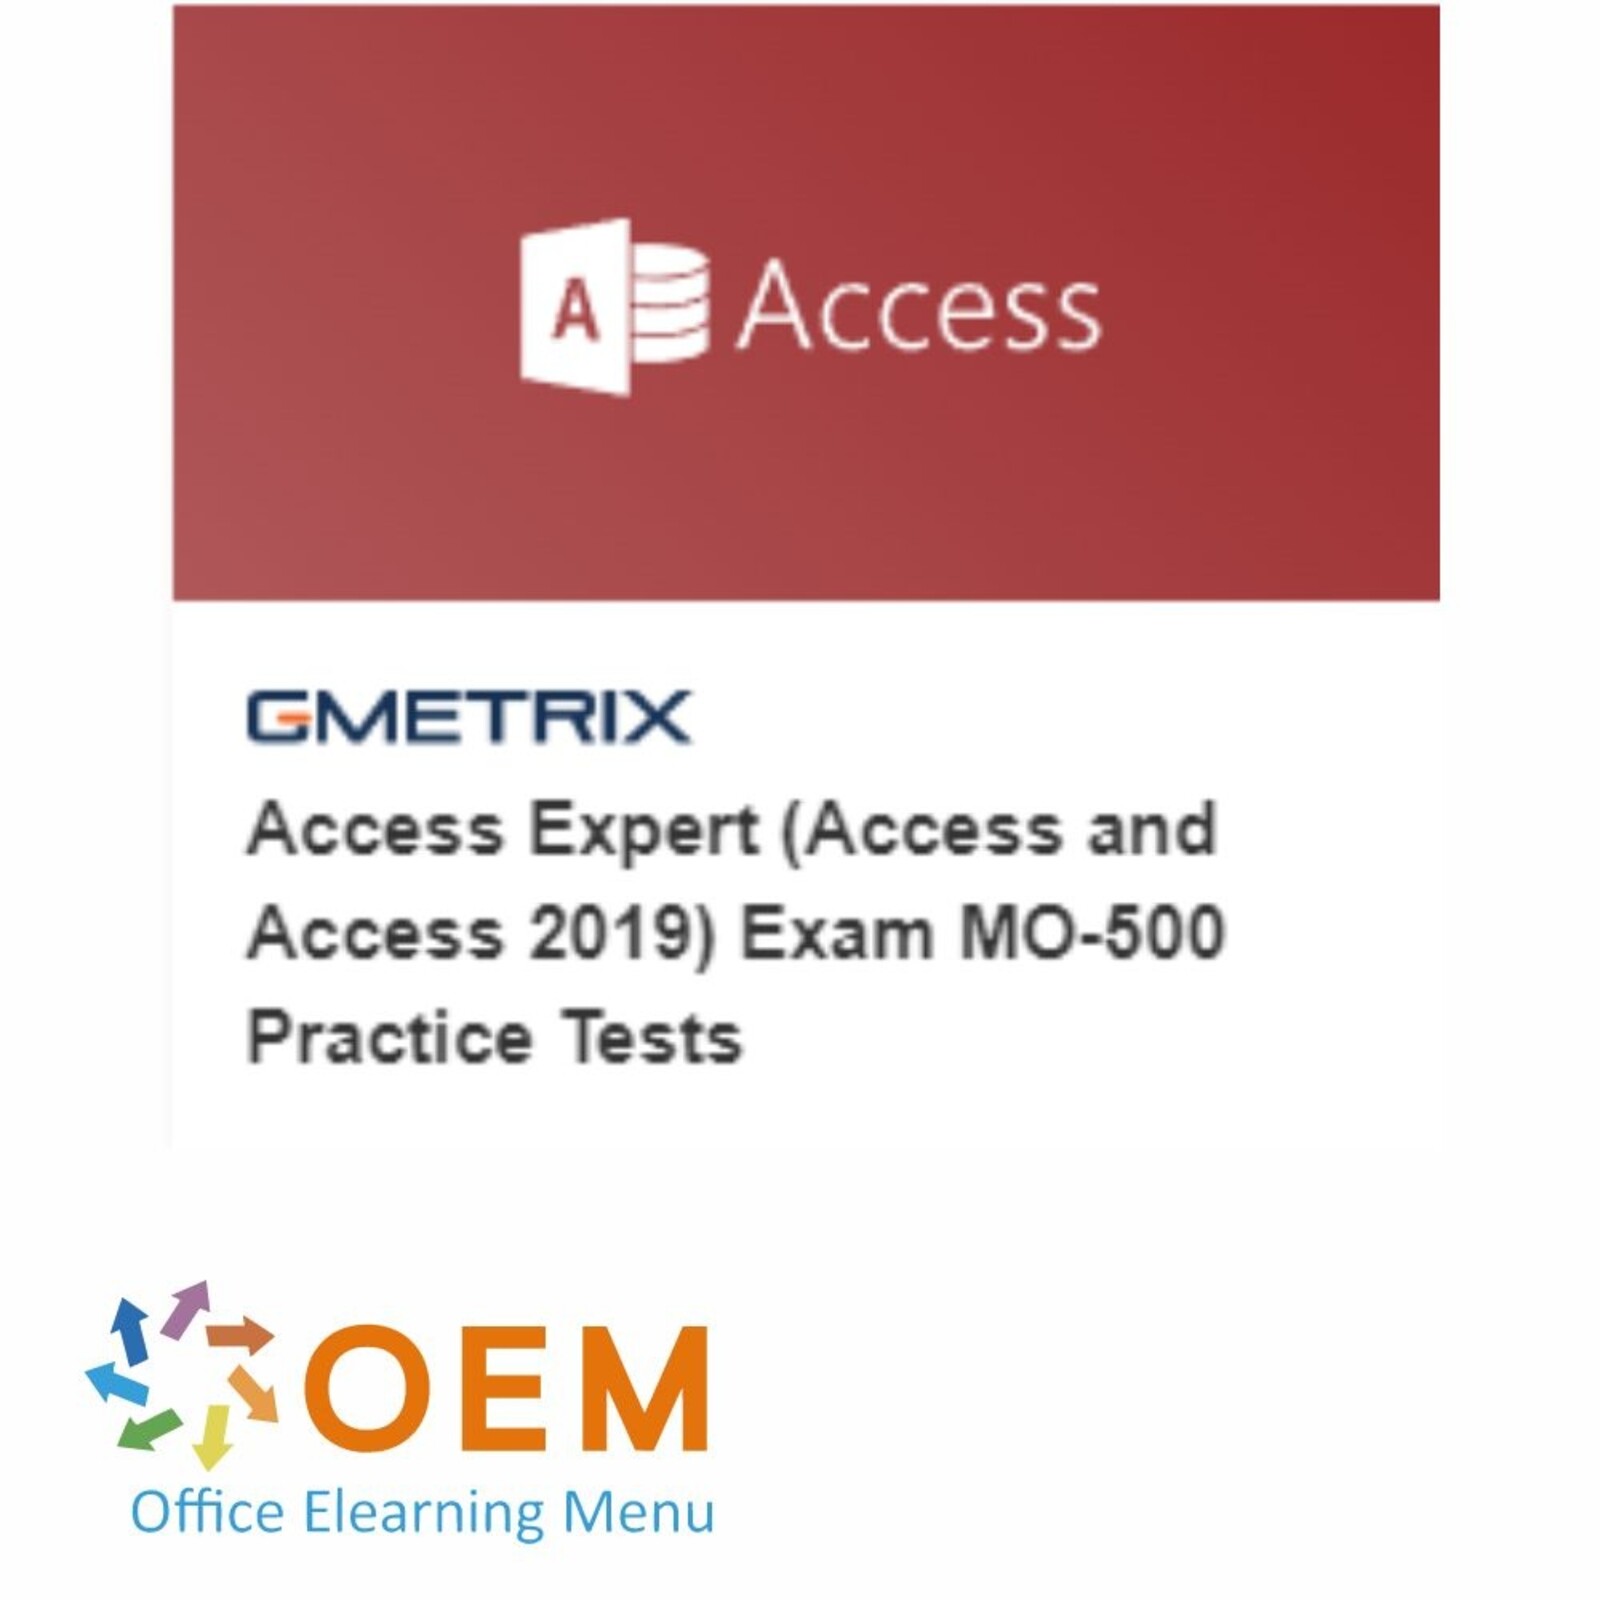 GMetrix MO-500 Access Expert 2019 GMetrix Practice Exam